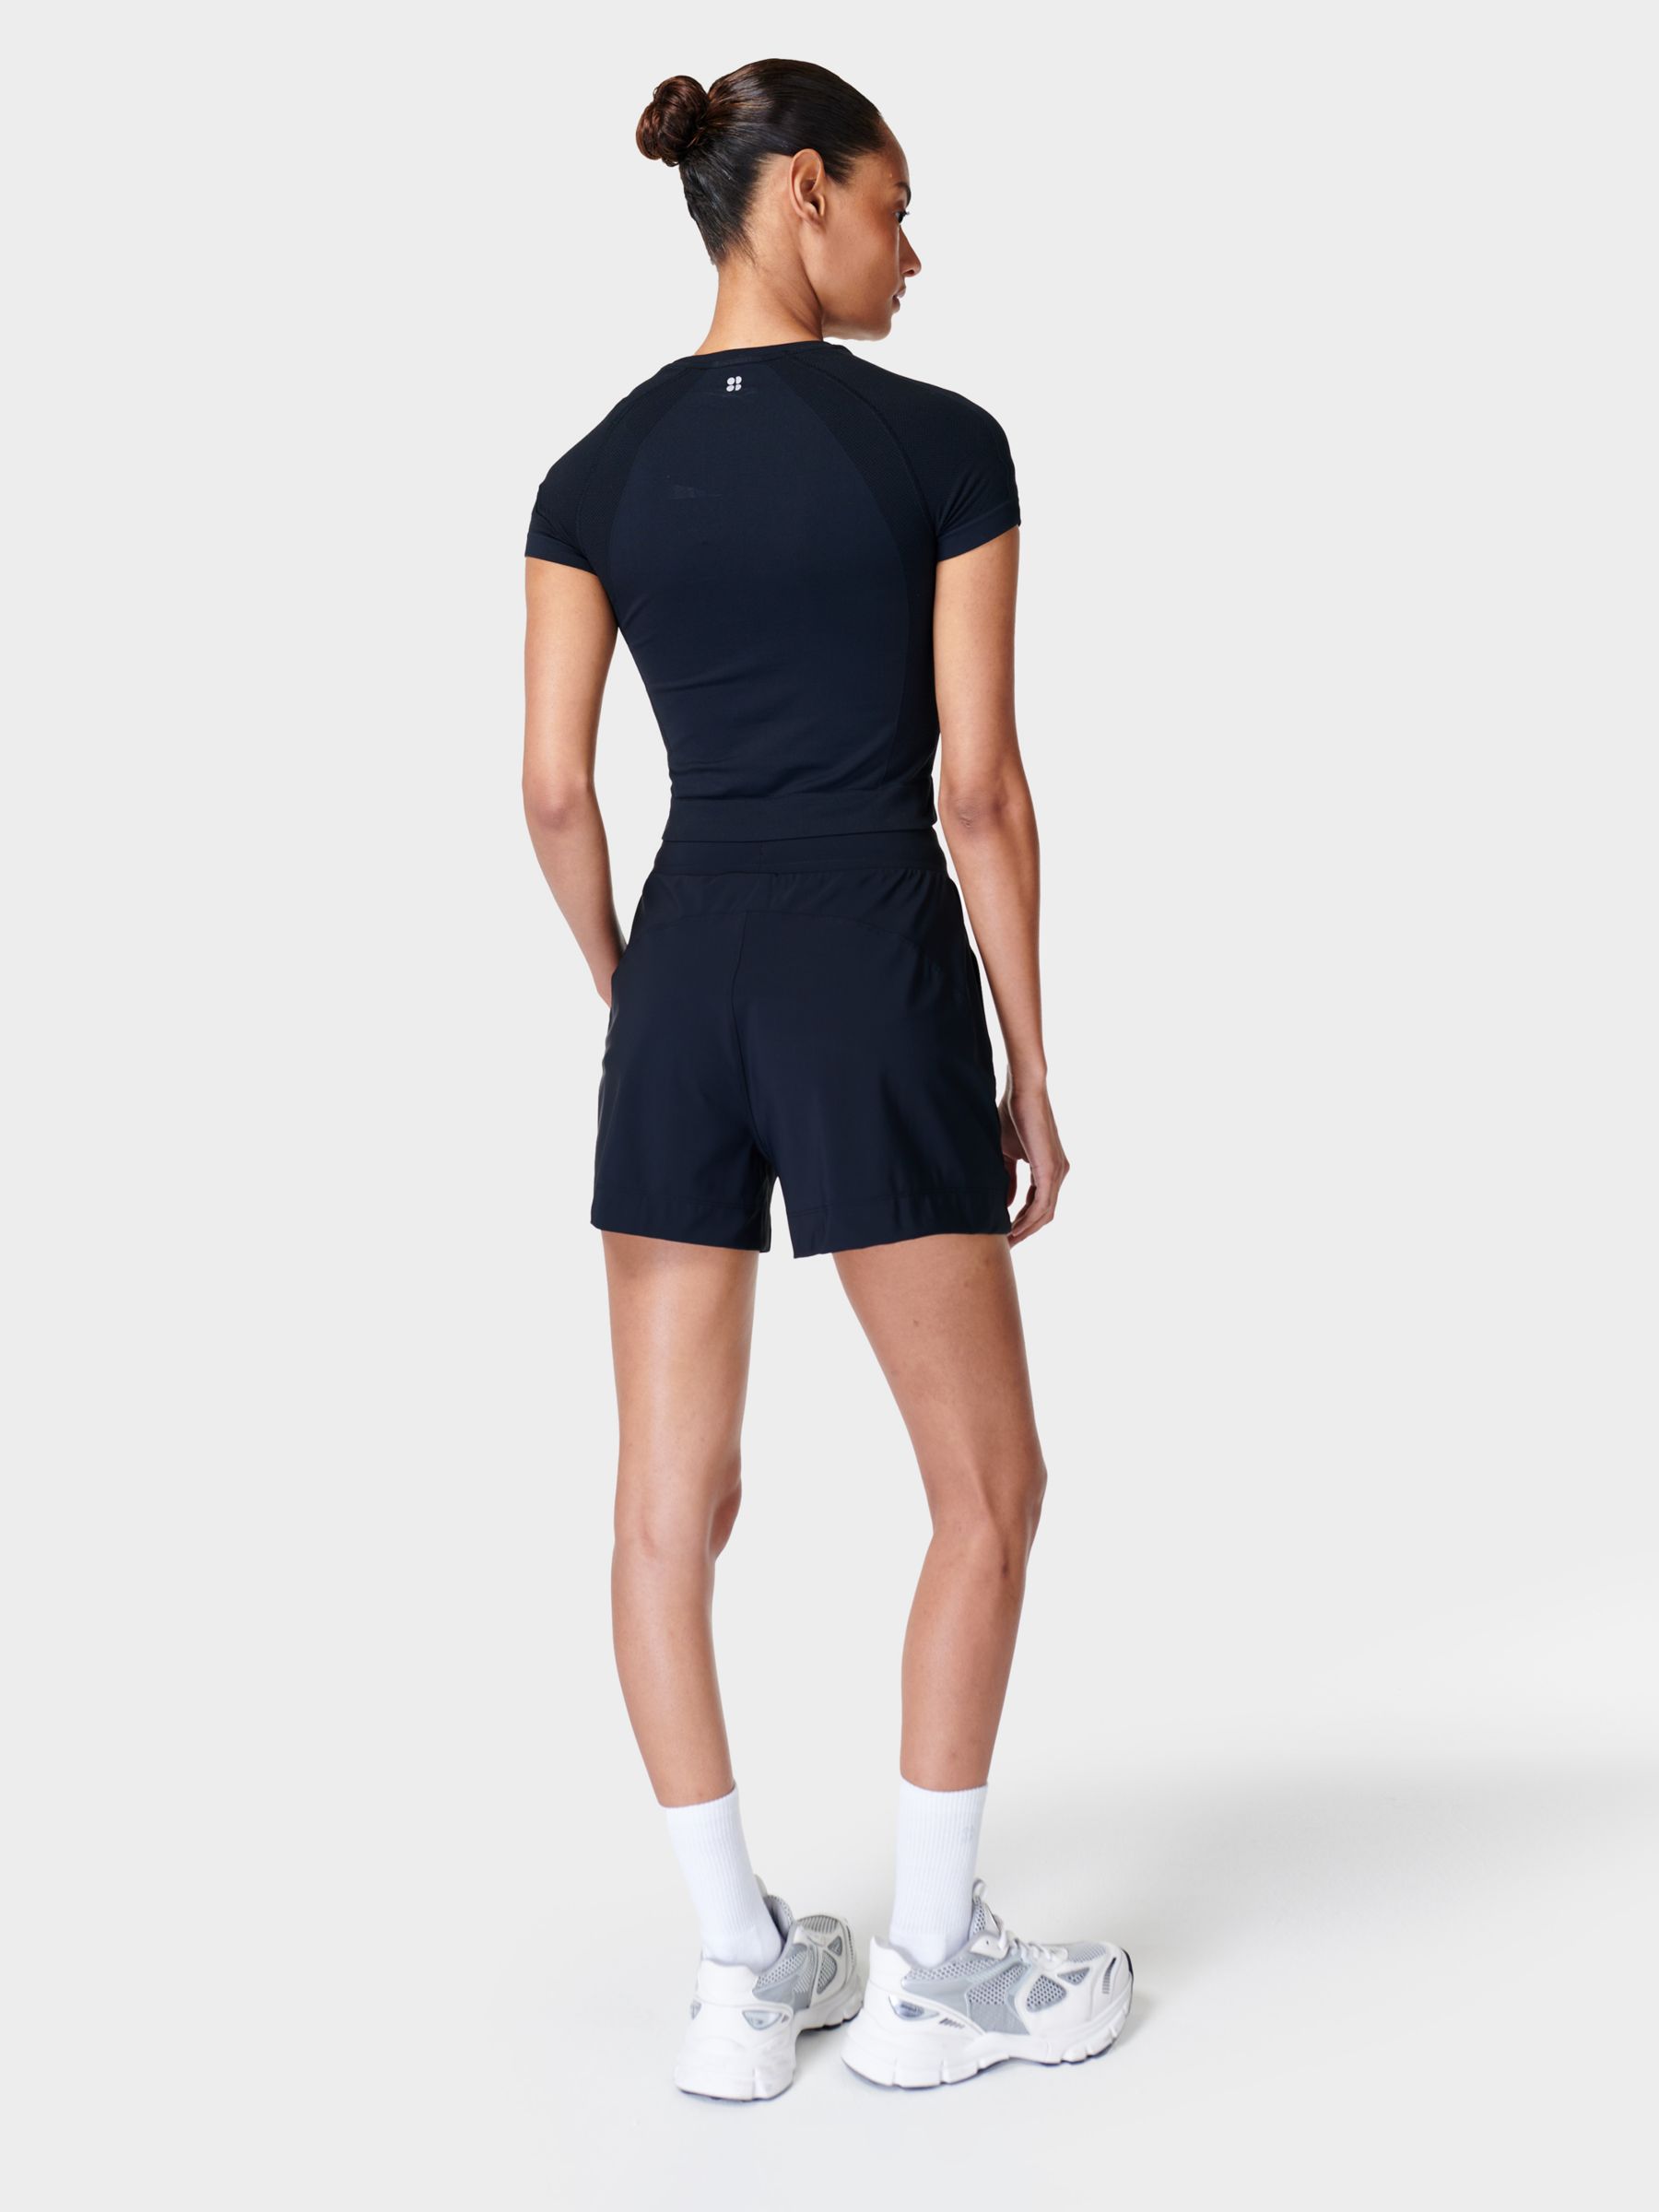 Sweaty Betty Explorer 3.5" Shorts, Black, XXS